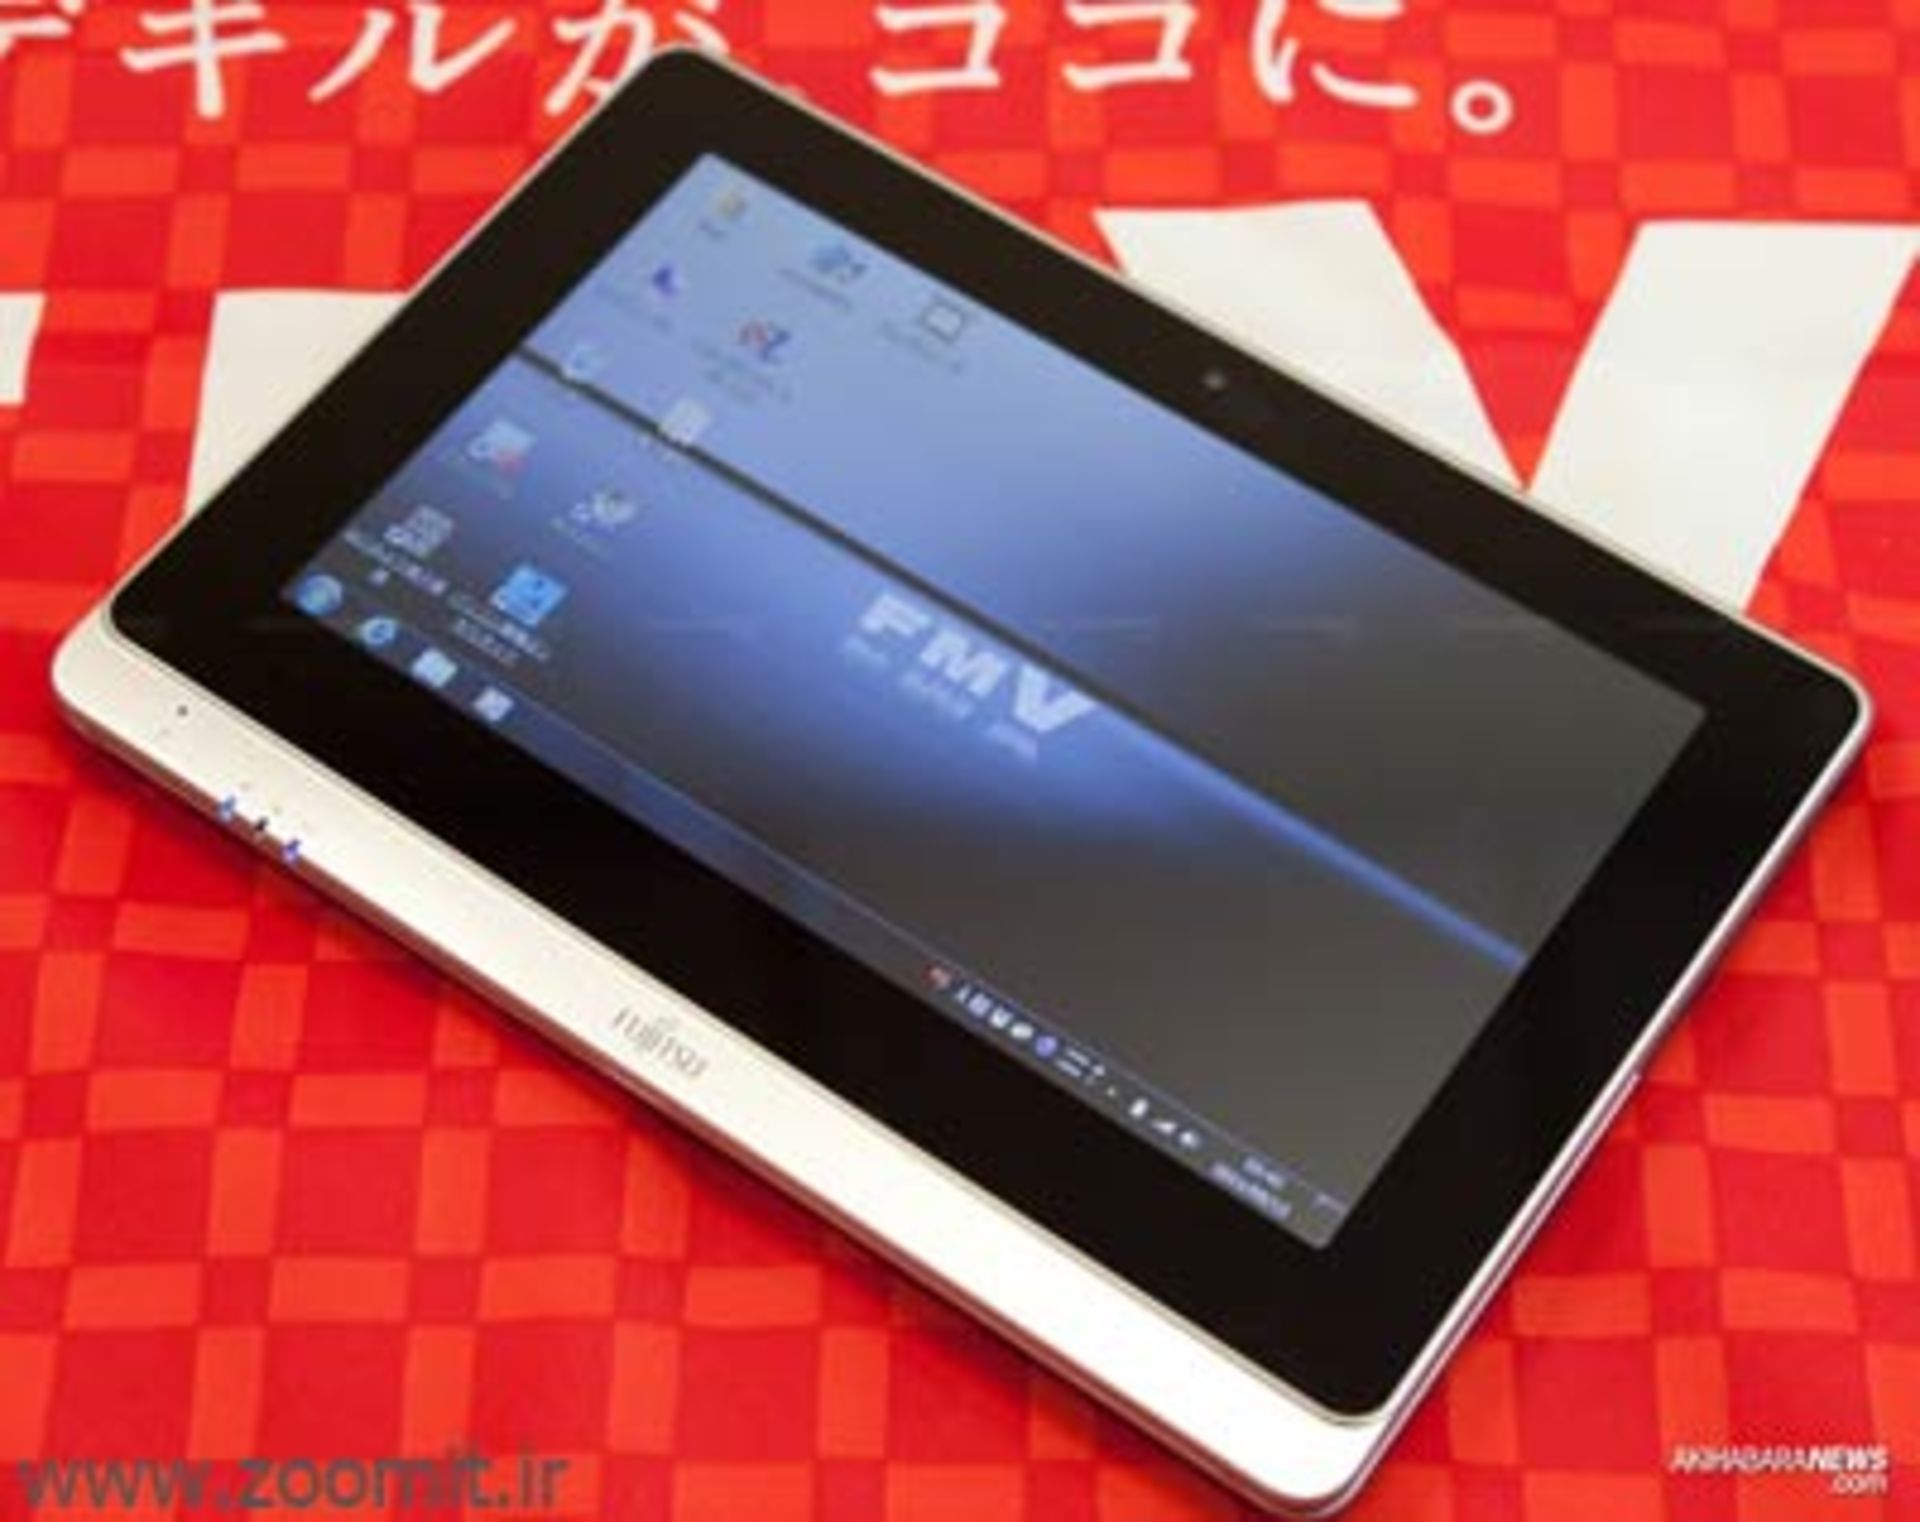 Fujitsu-THD40-Slide-out-keyboard-tablet-4